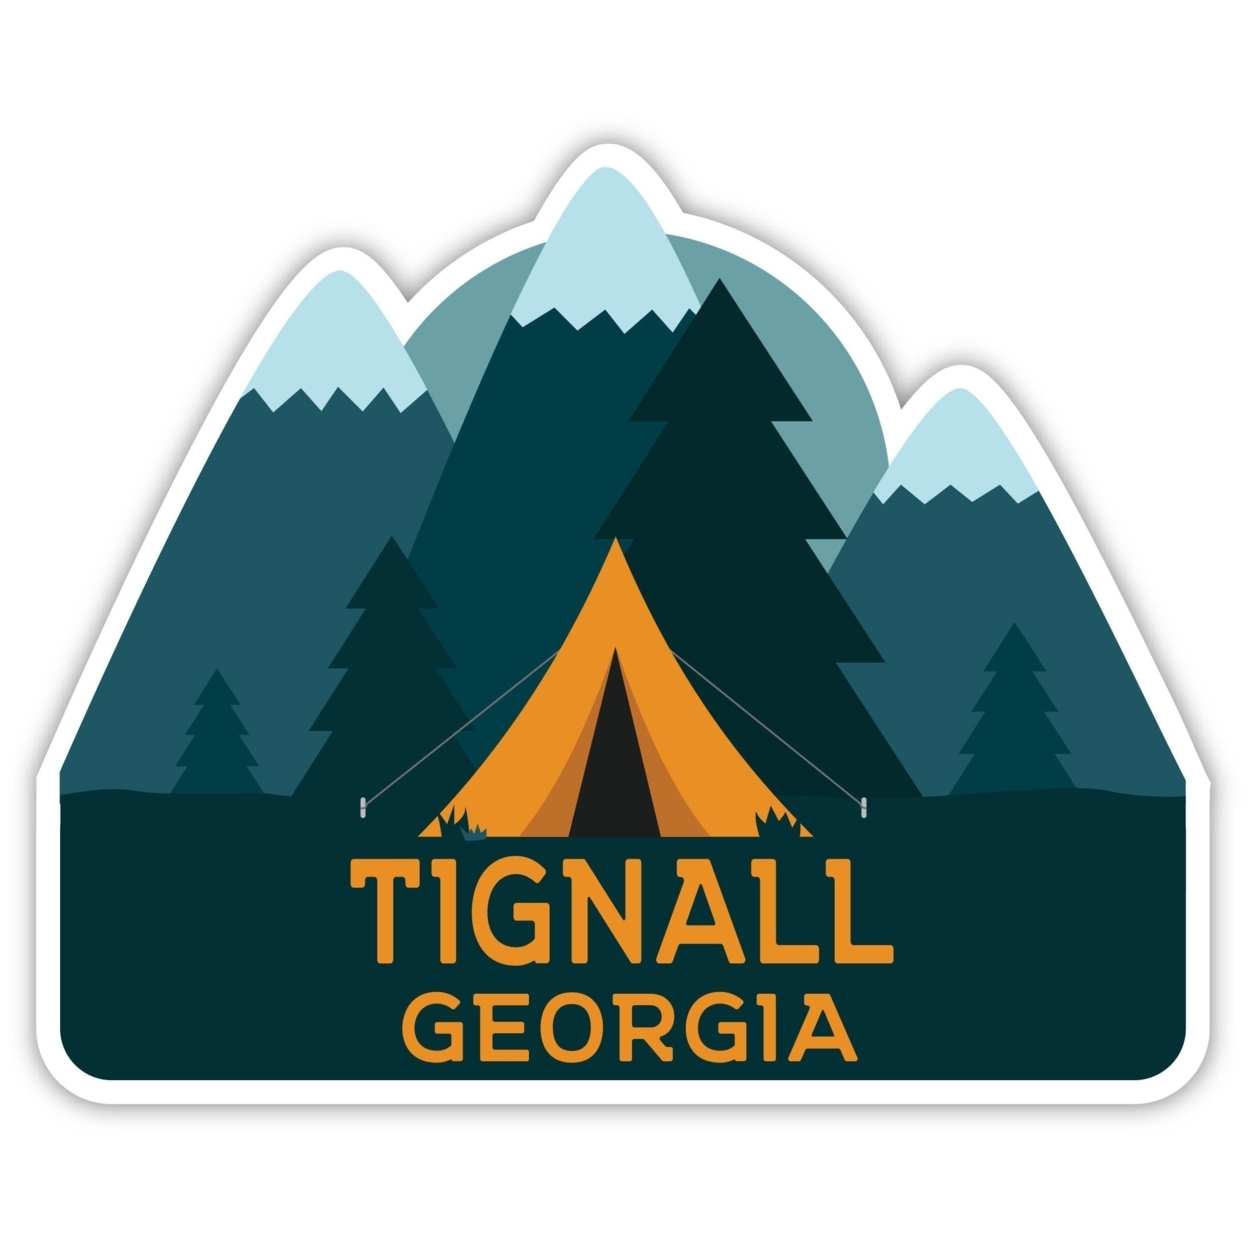 Tignall Georgia Souvenir Decorative Stickers (Choose Theme And Size) - Single Unit, 4-Inch, Tent